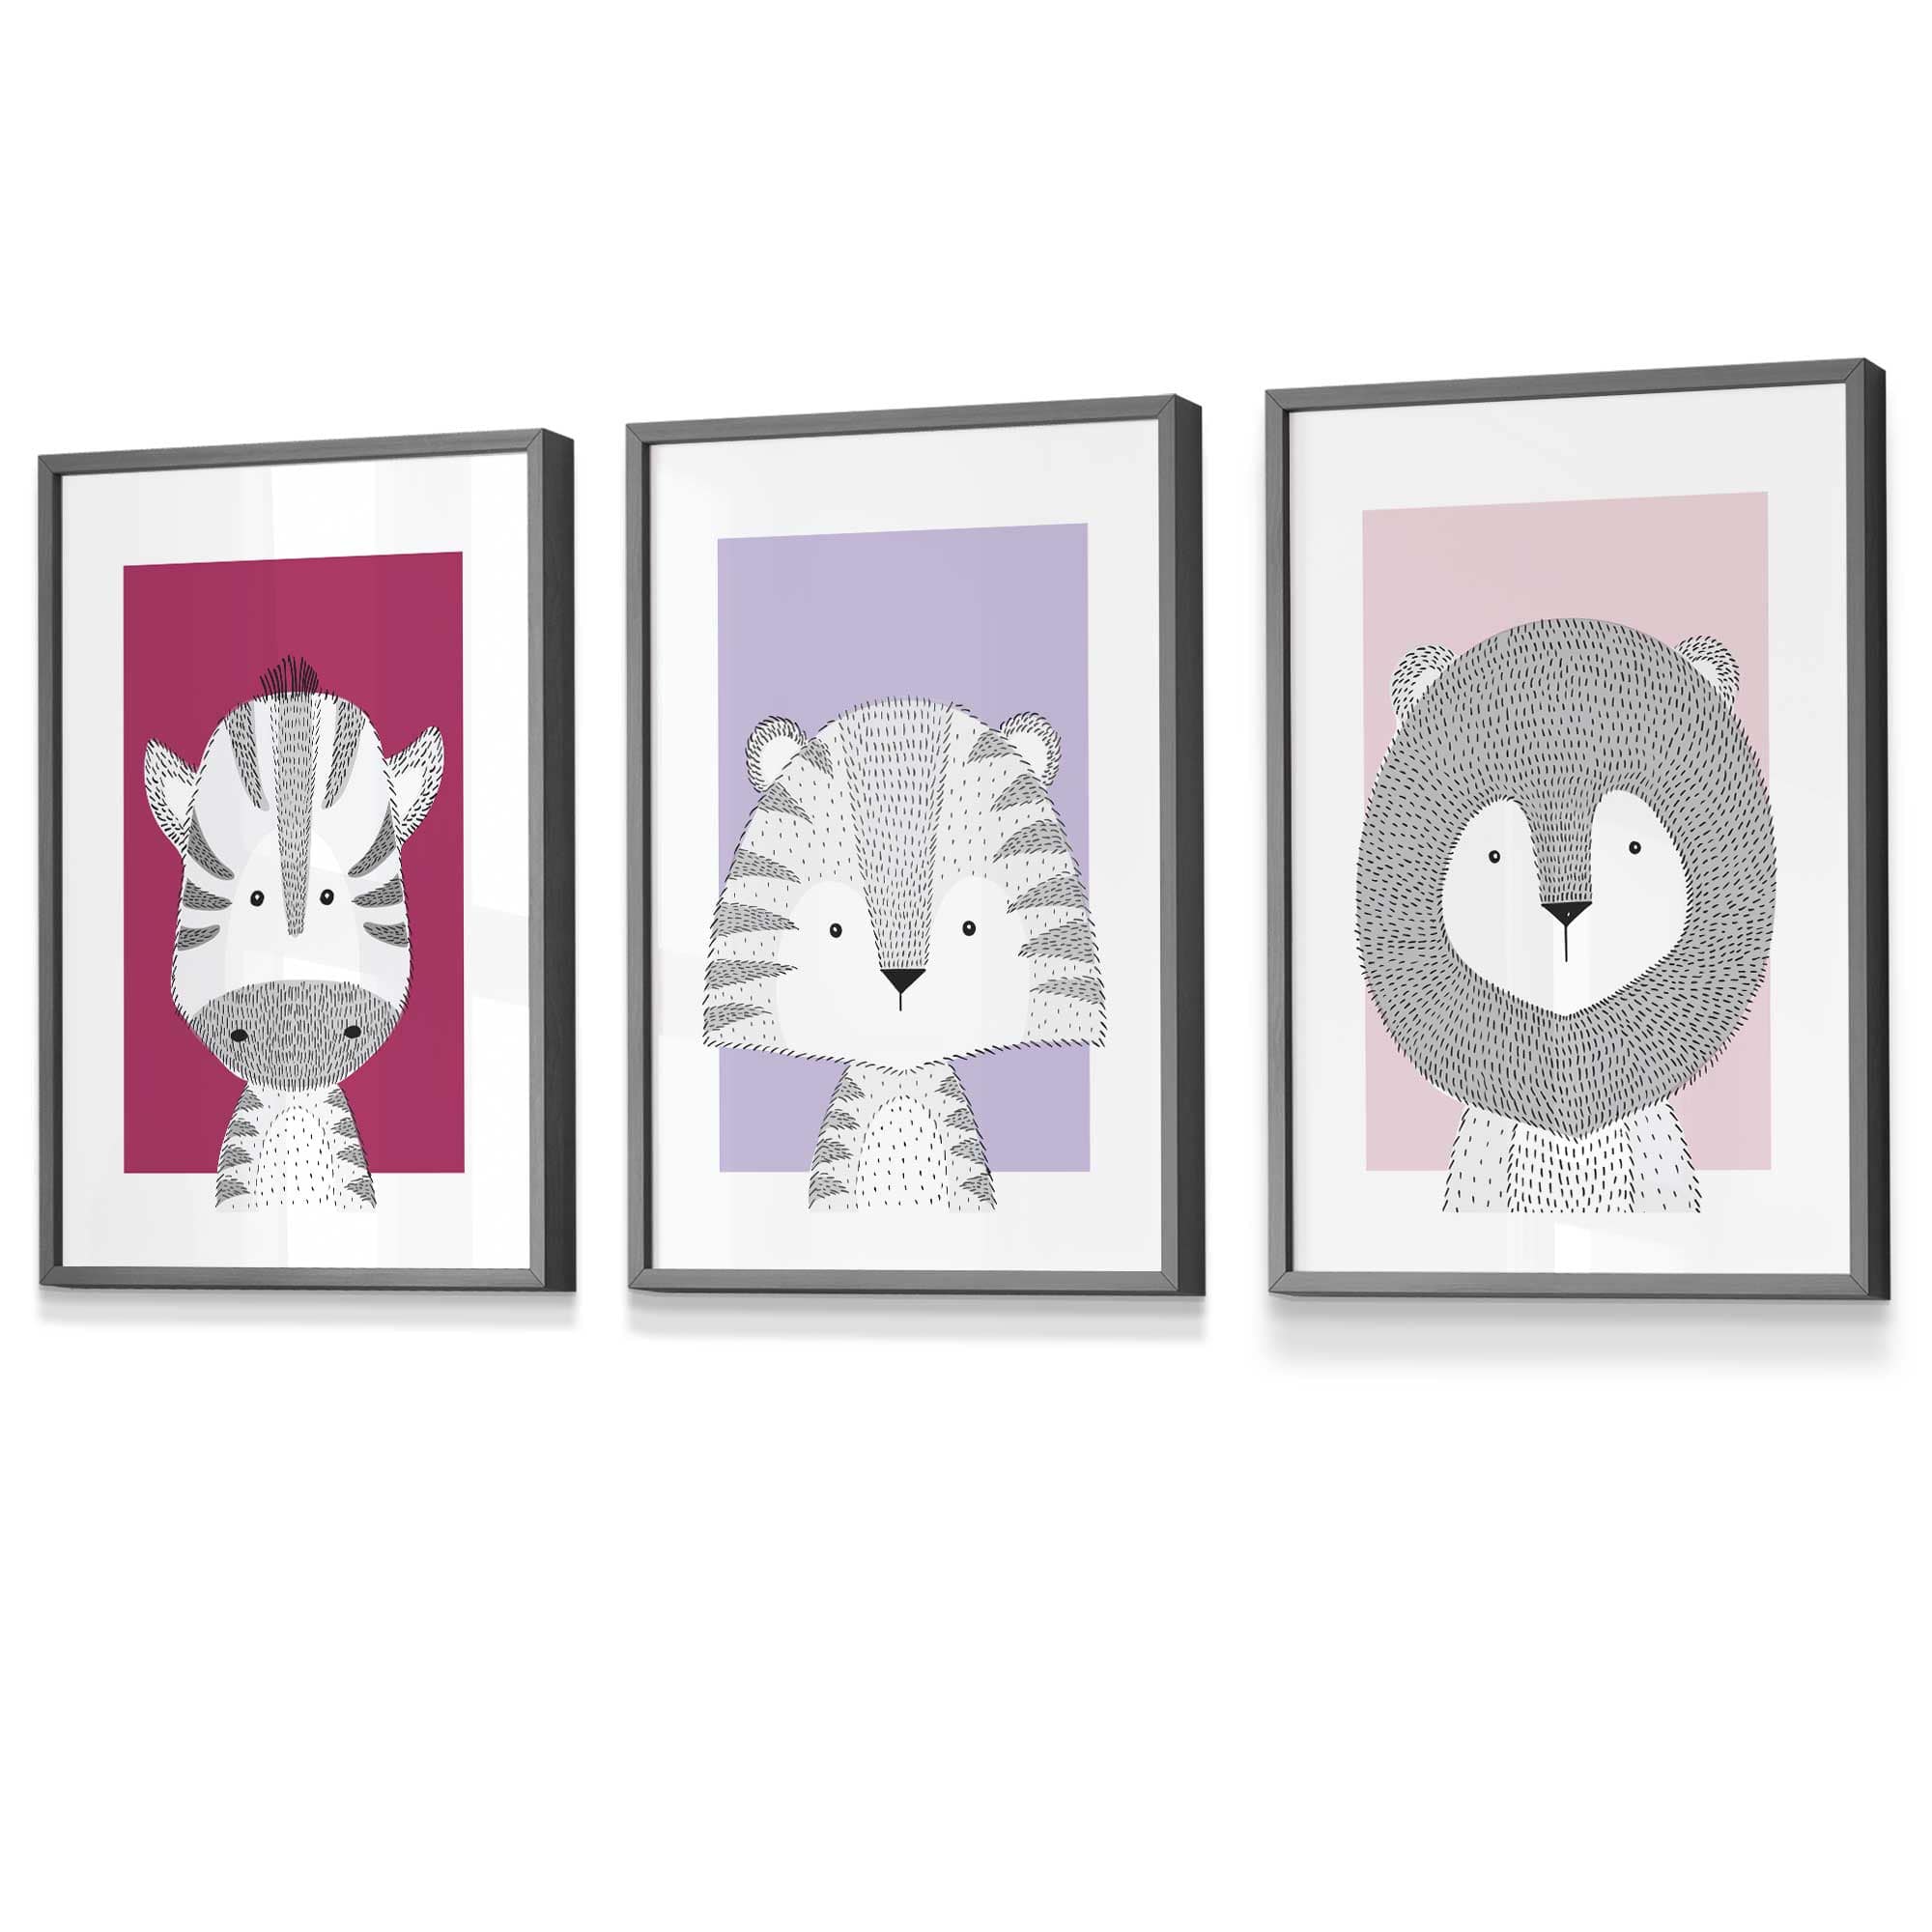 Set of 3 Nursery Wall Art Prints / Framed Scandinavian Sketch Jungle Animals in Pinks and Lilac | Artze Wall Art UK